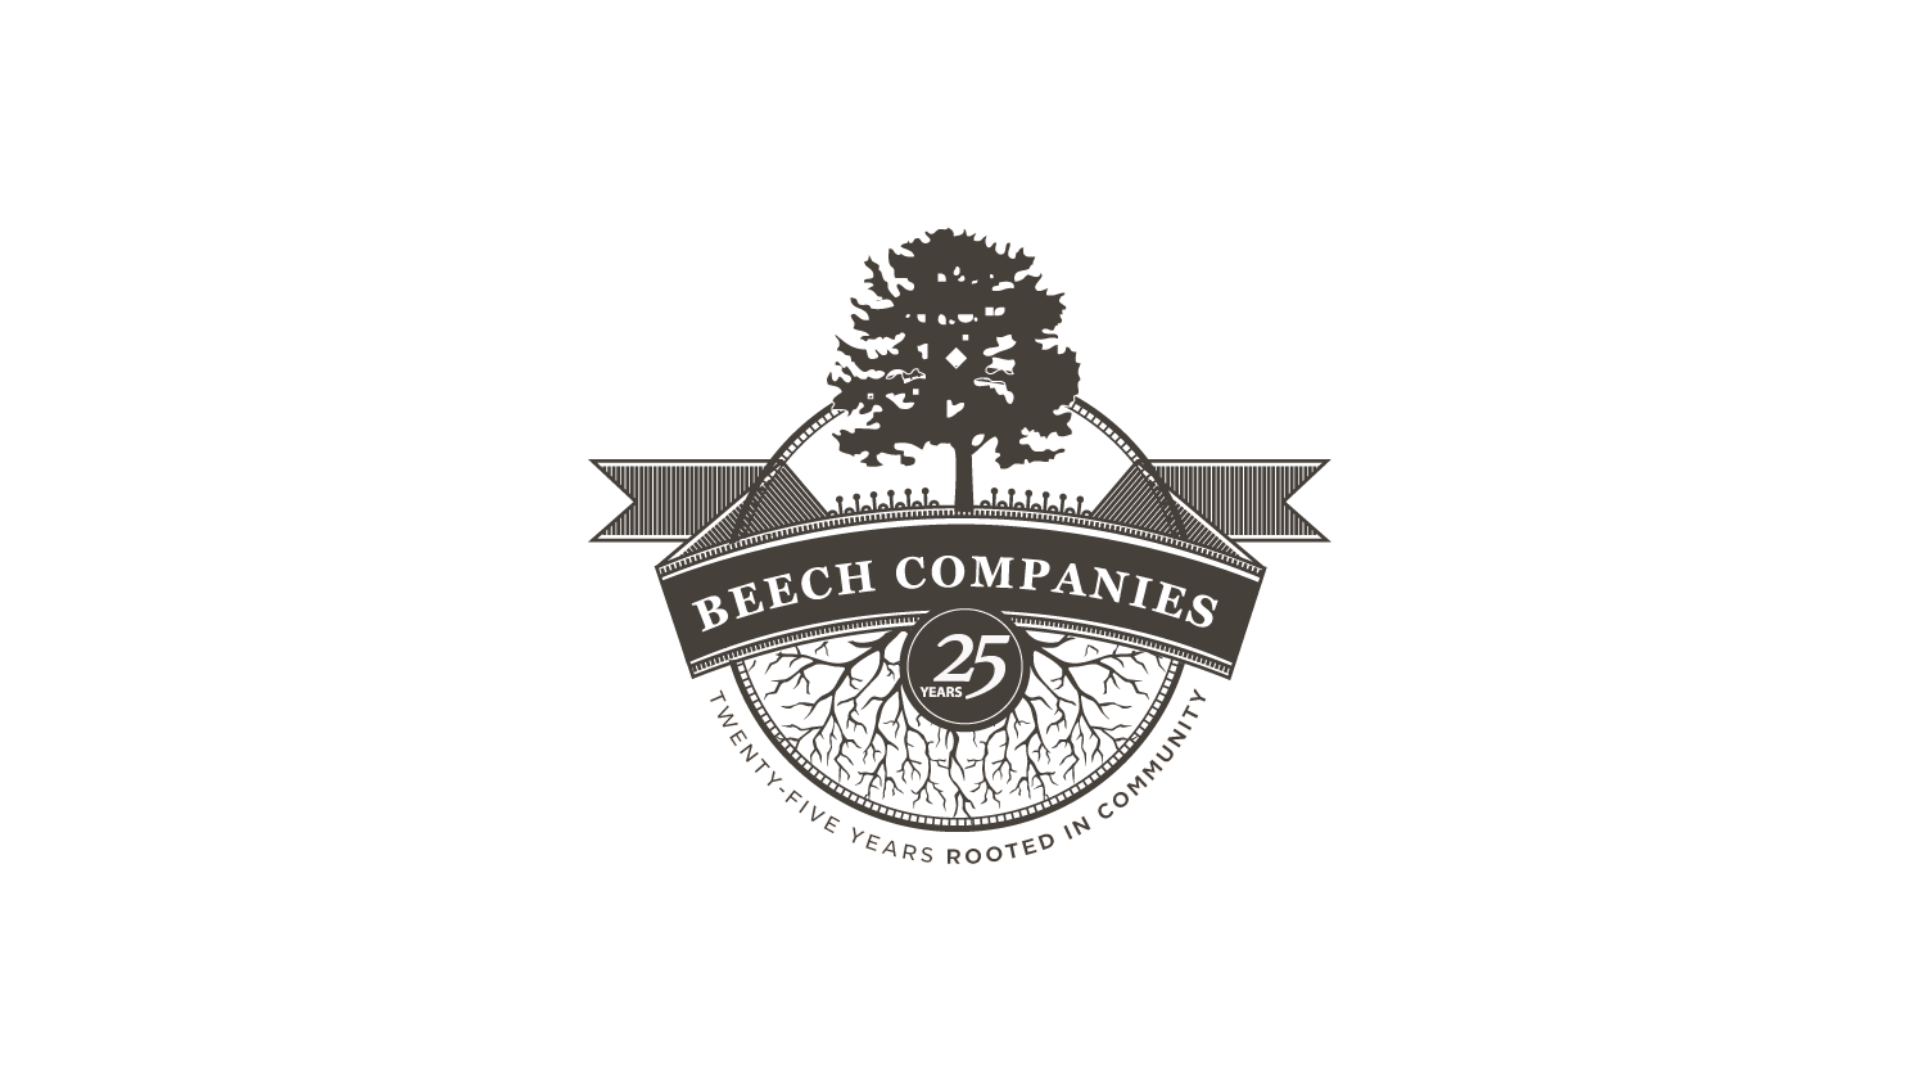 Beech Companies